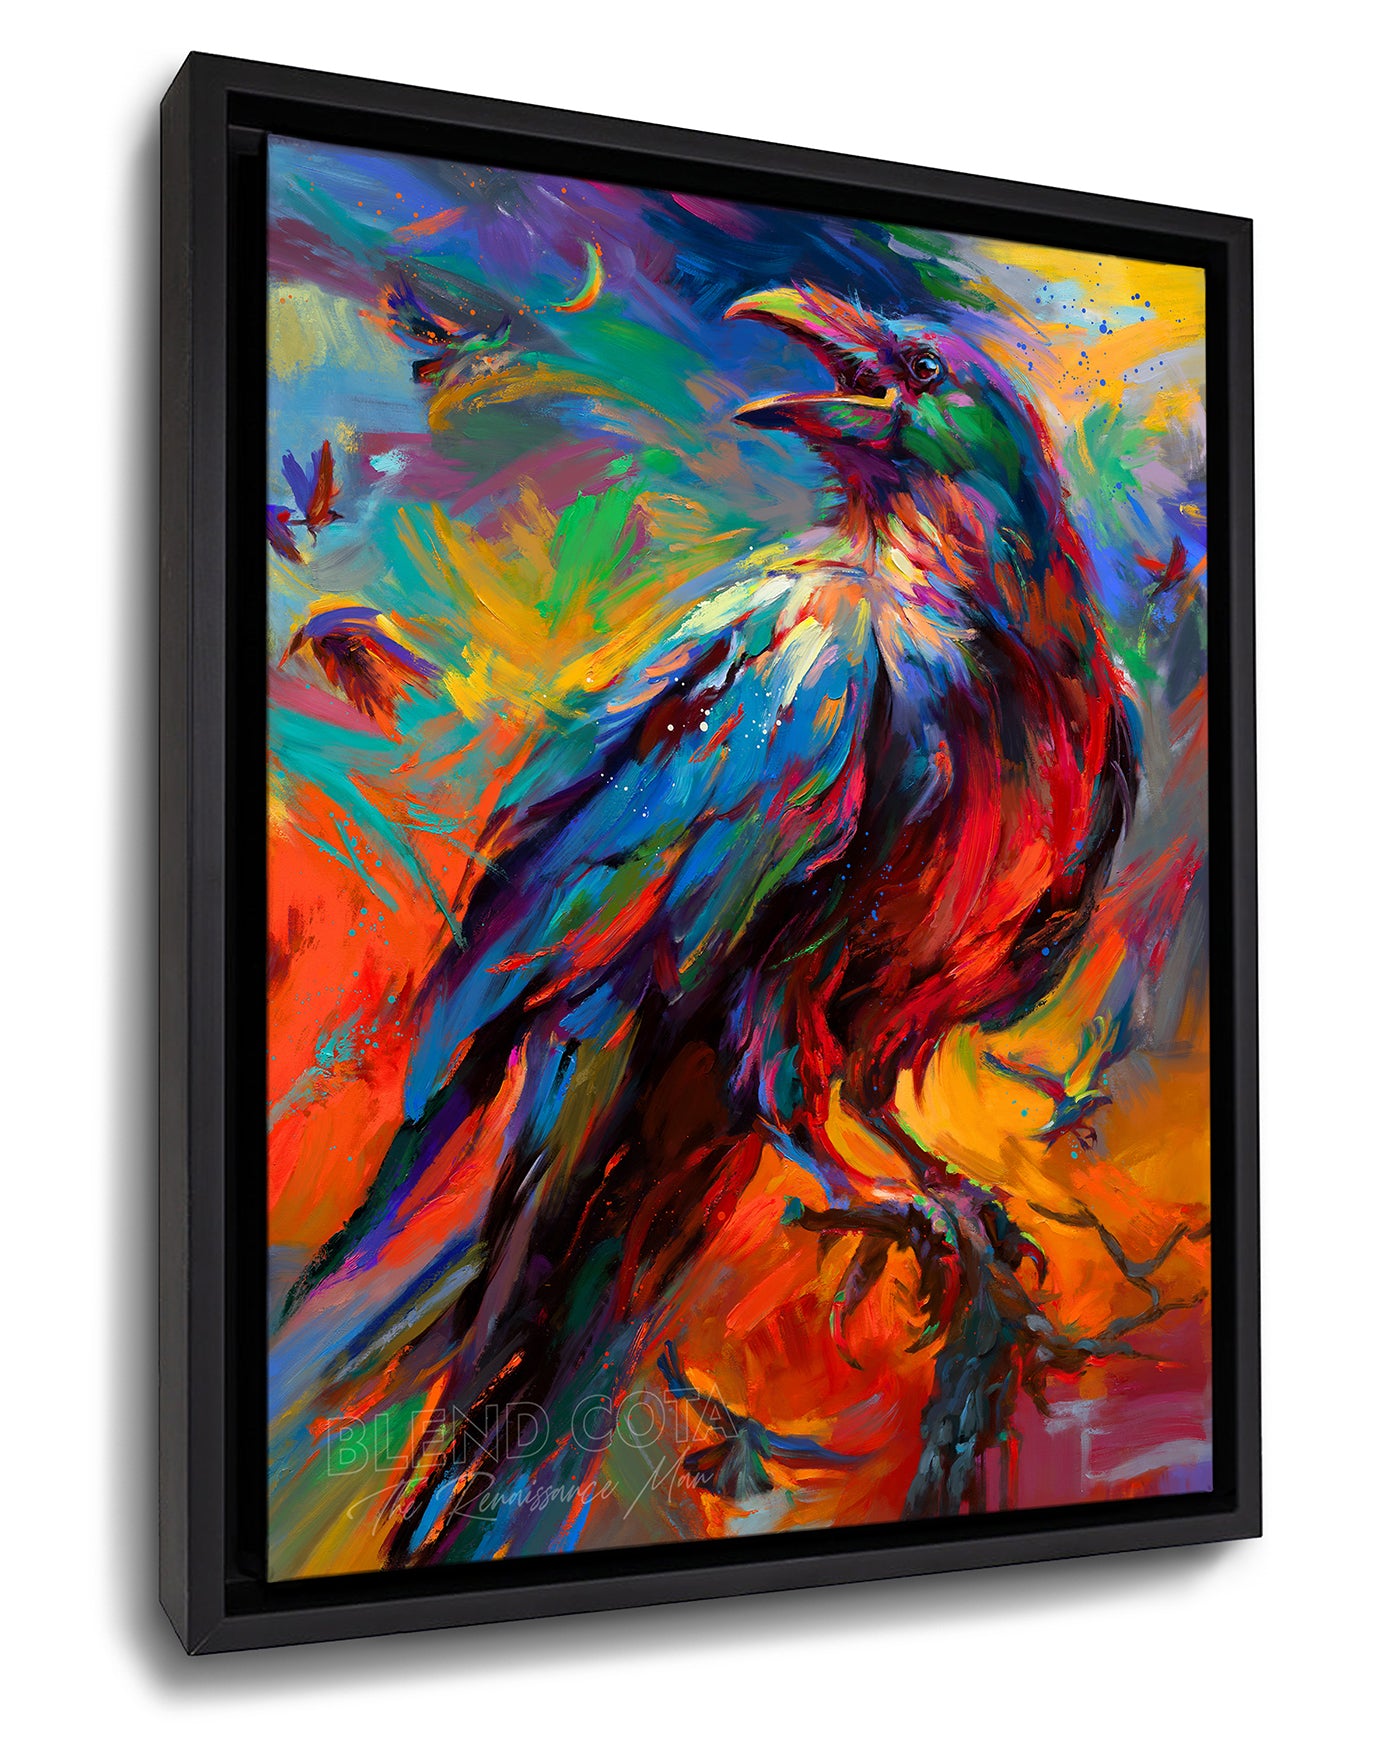 The Mystical Raven - Blend Cota Art Print Framed on Canvas - Blend Cota Studios - Black Frame